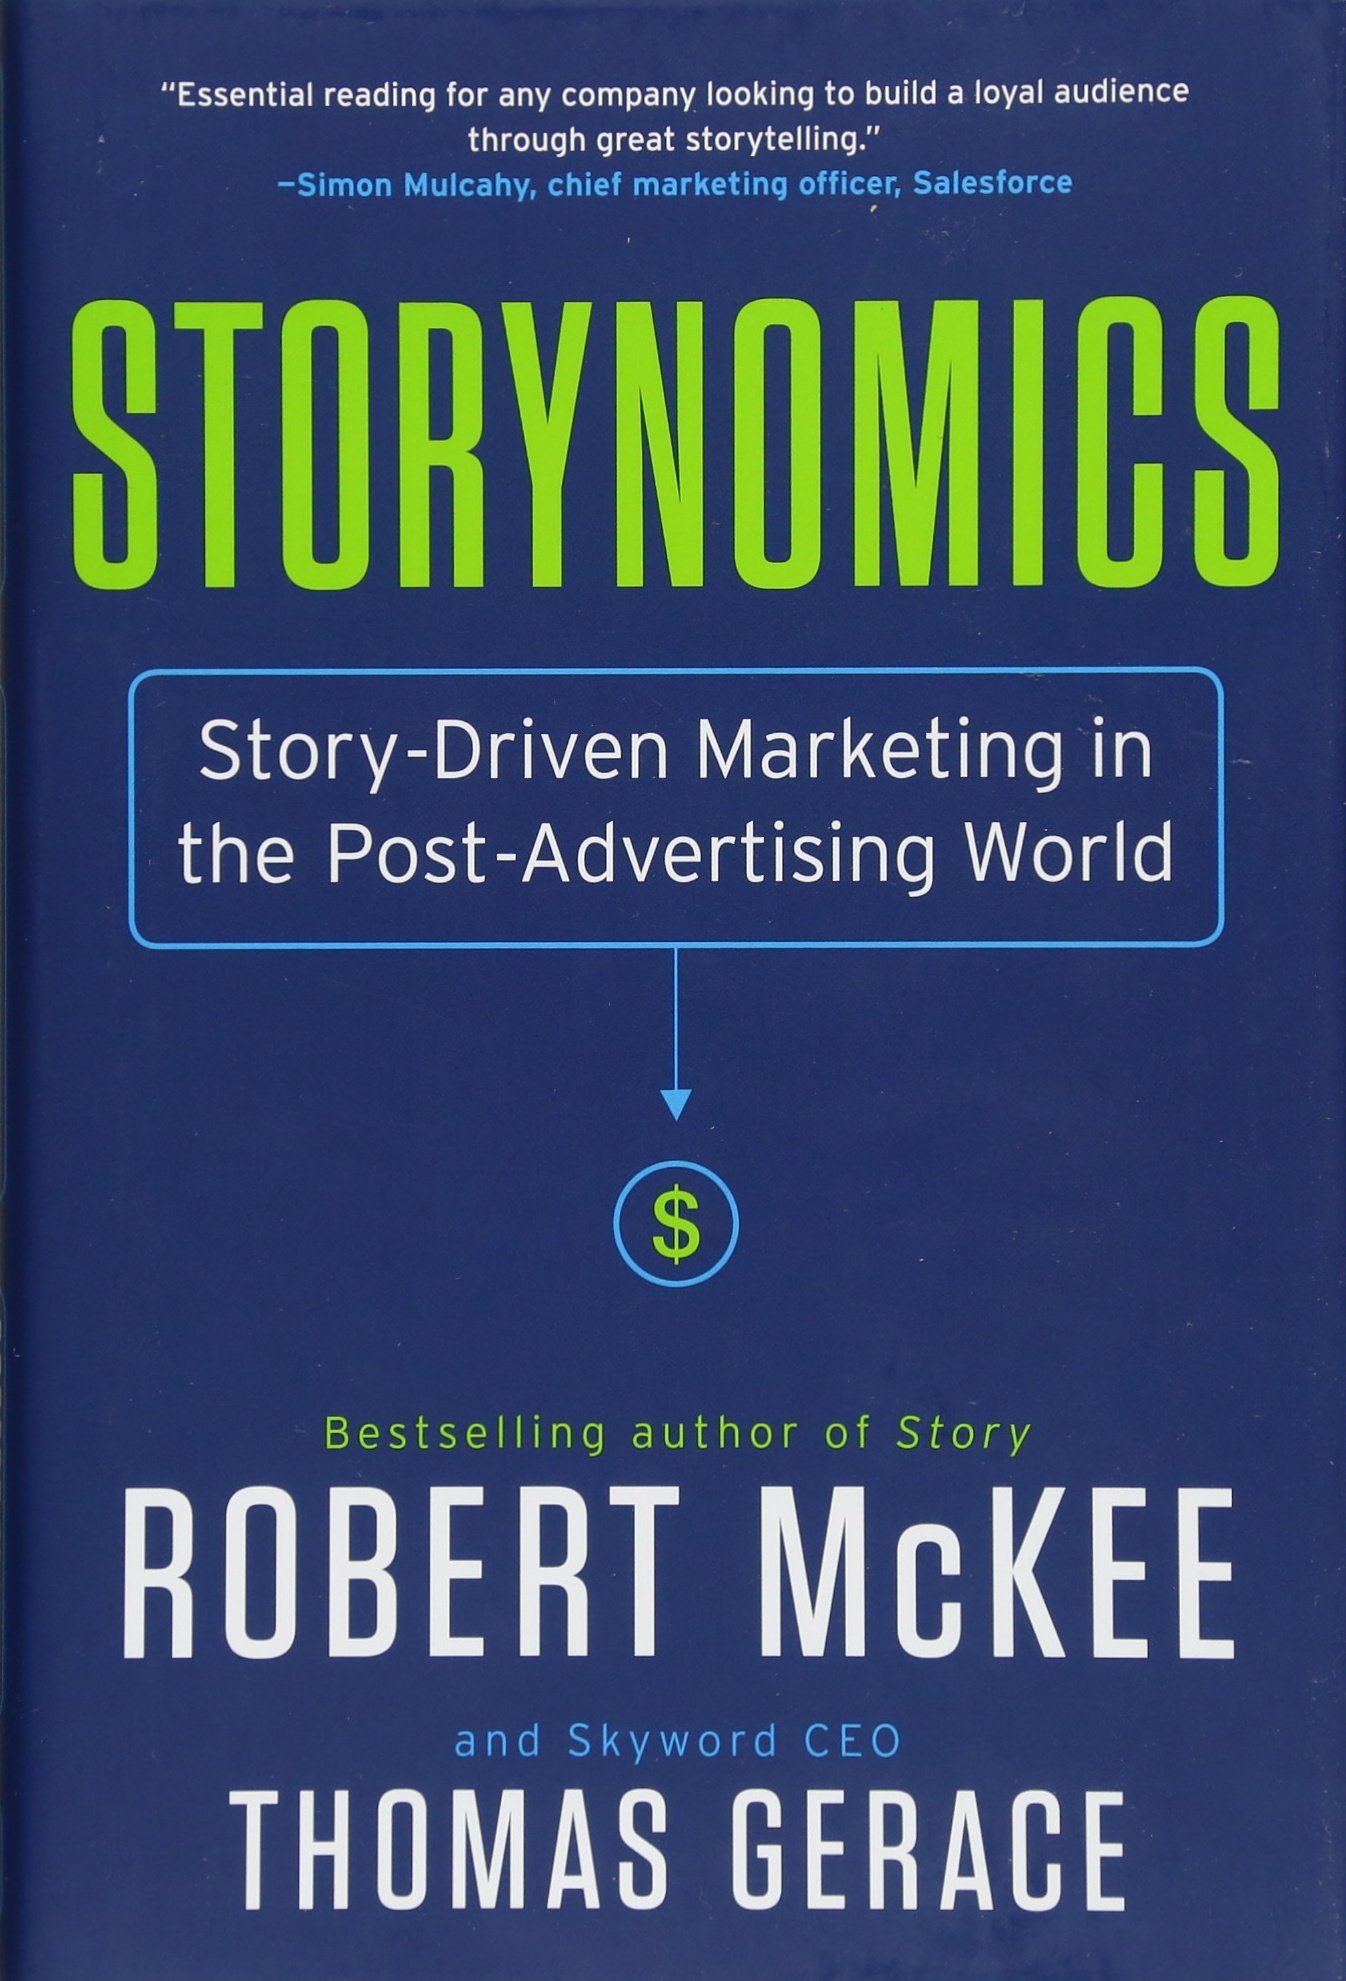 https://www.amazon.com/Storynomics-Story-Driven-Marketing-Post-Advertising-World/dp/1538727935